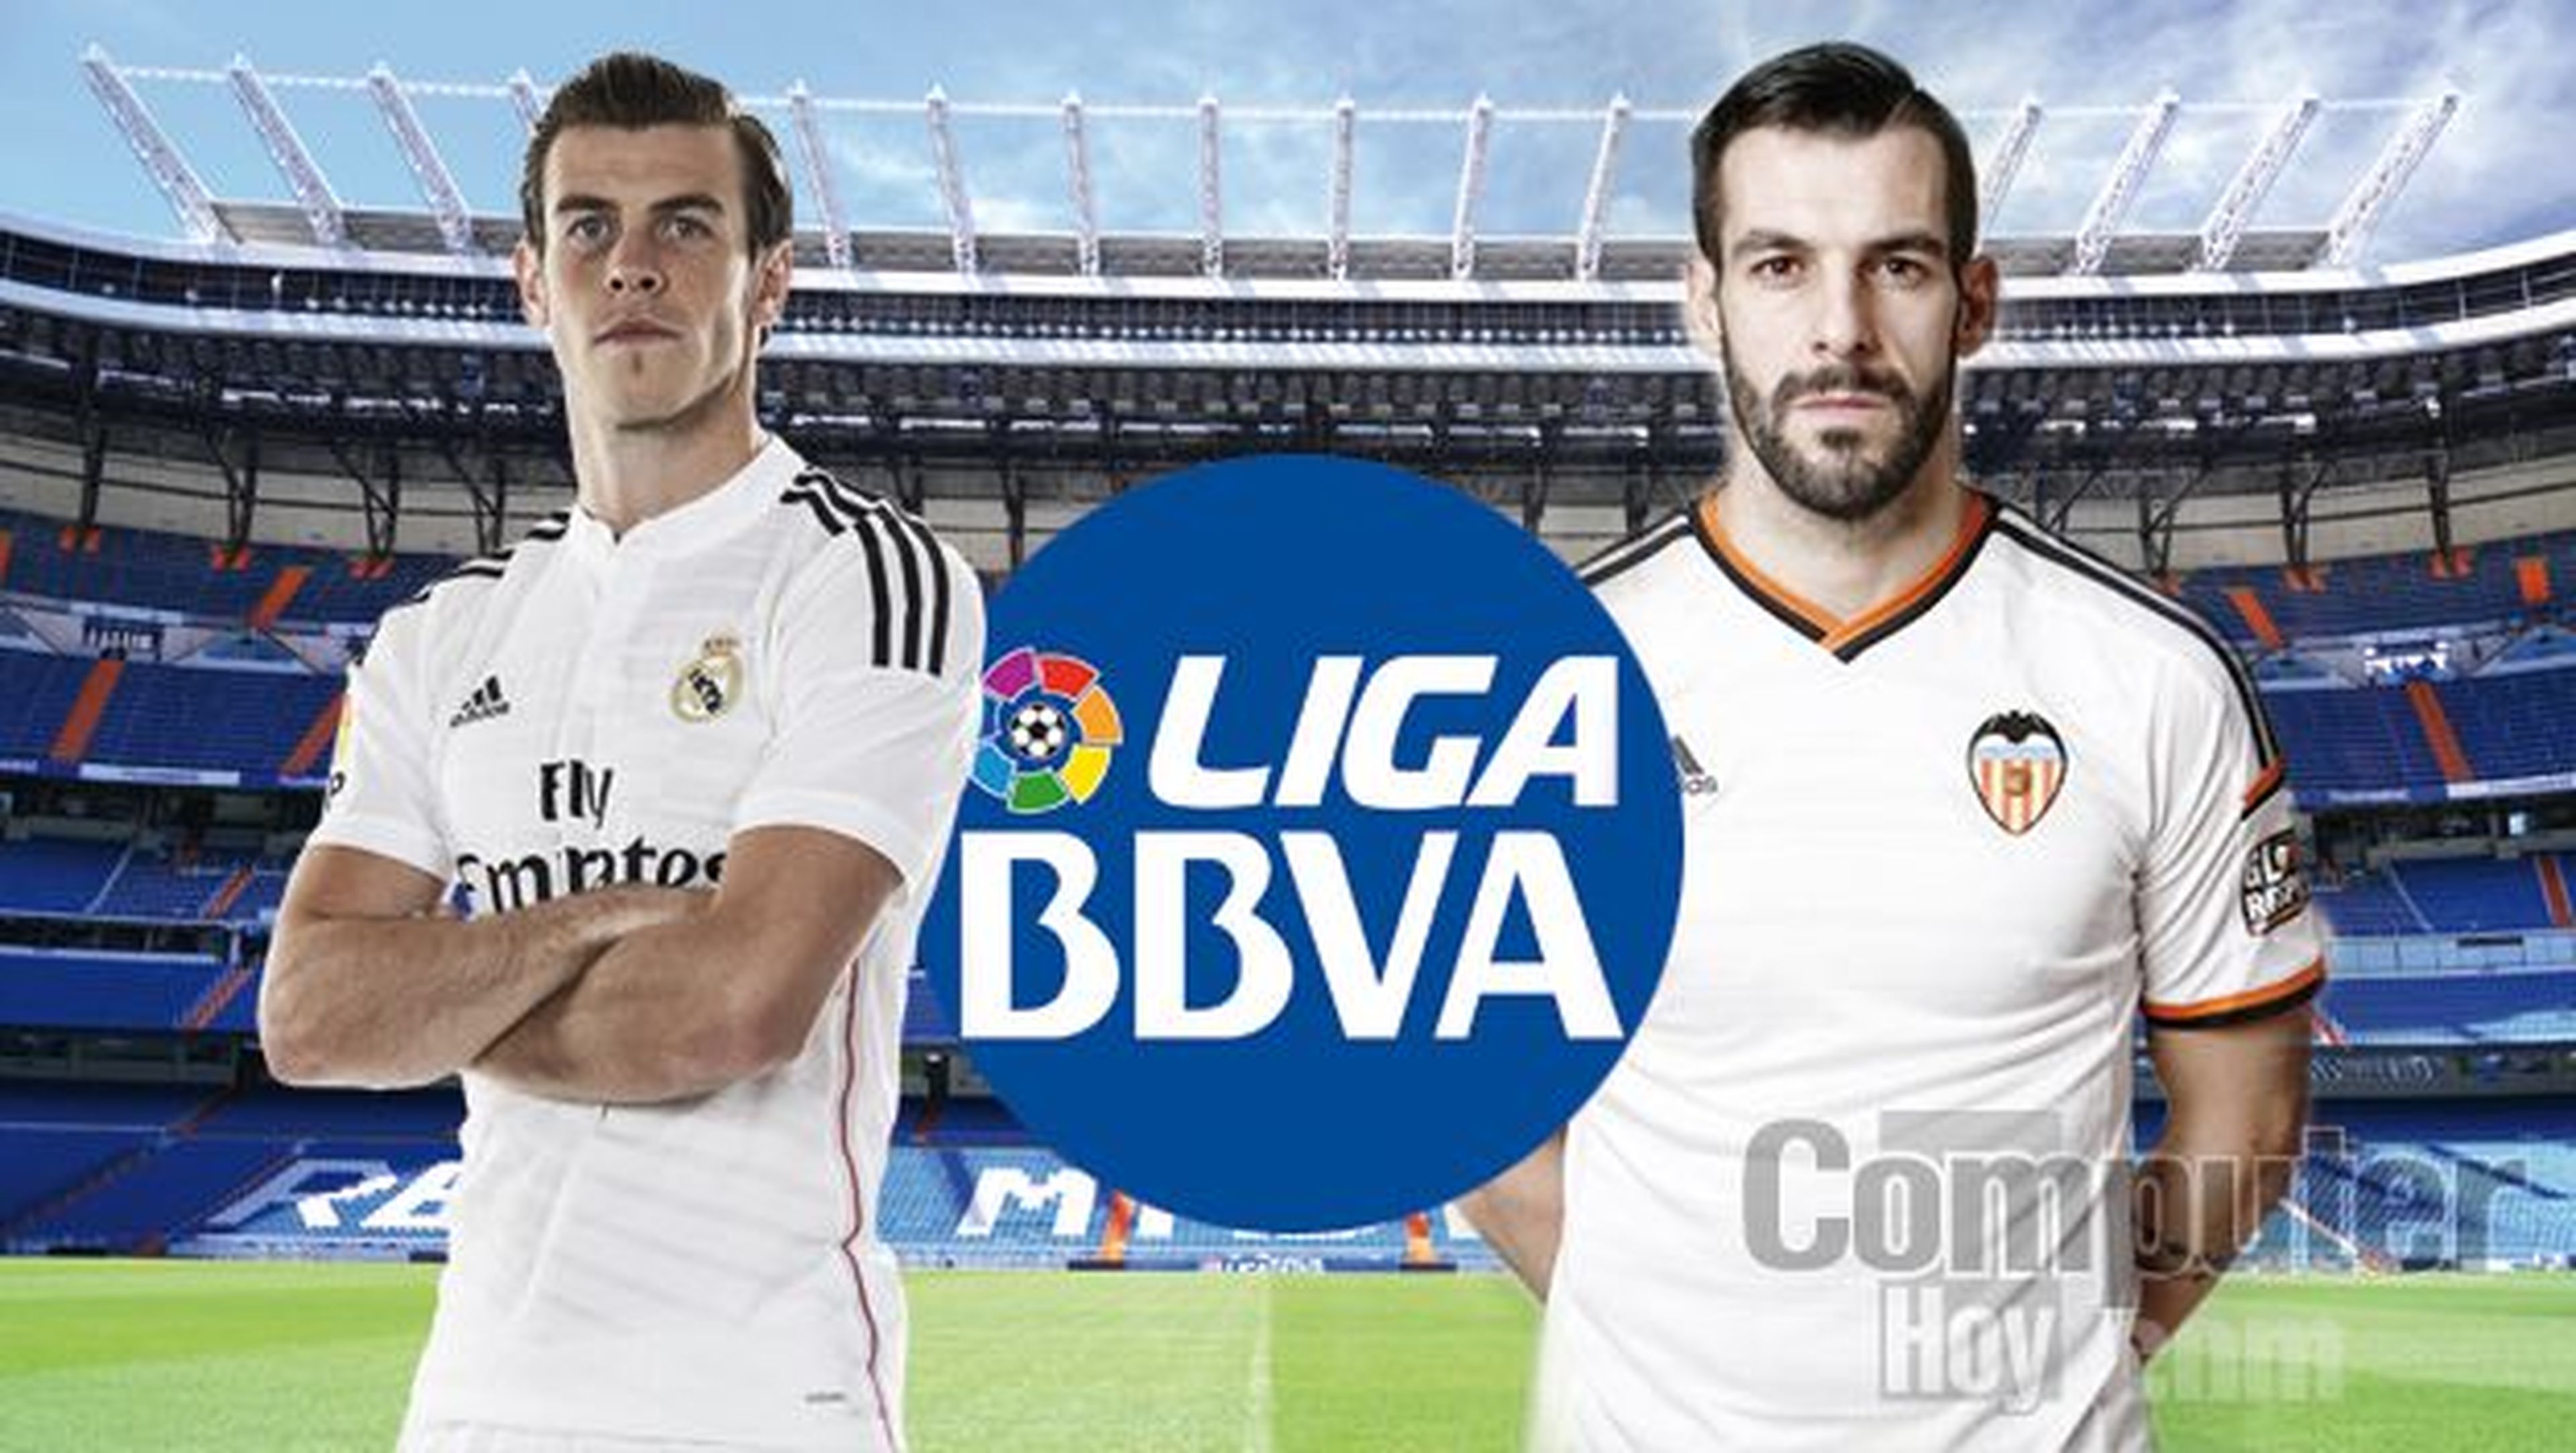 Ver online Real Madrid Valencia de Liga